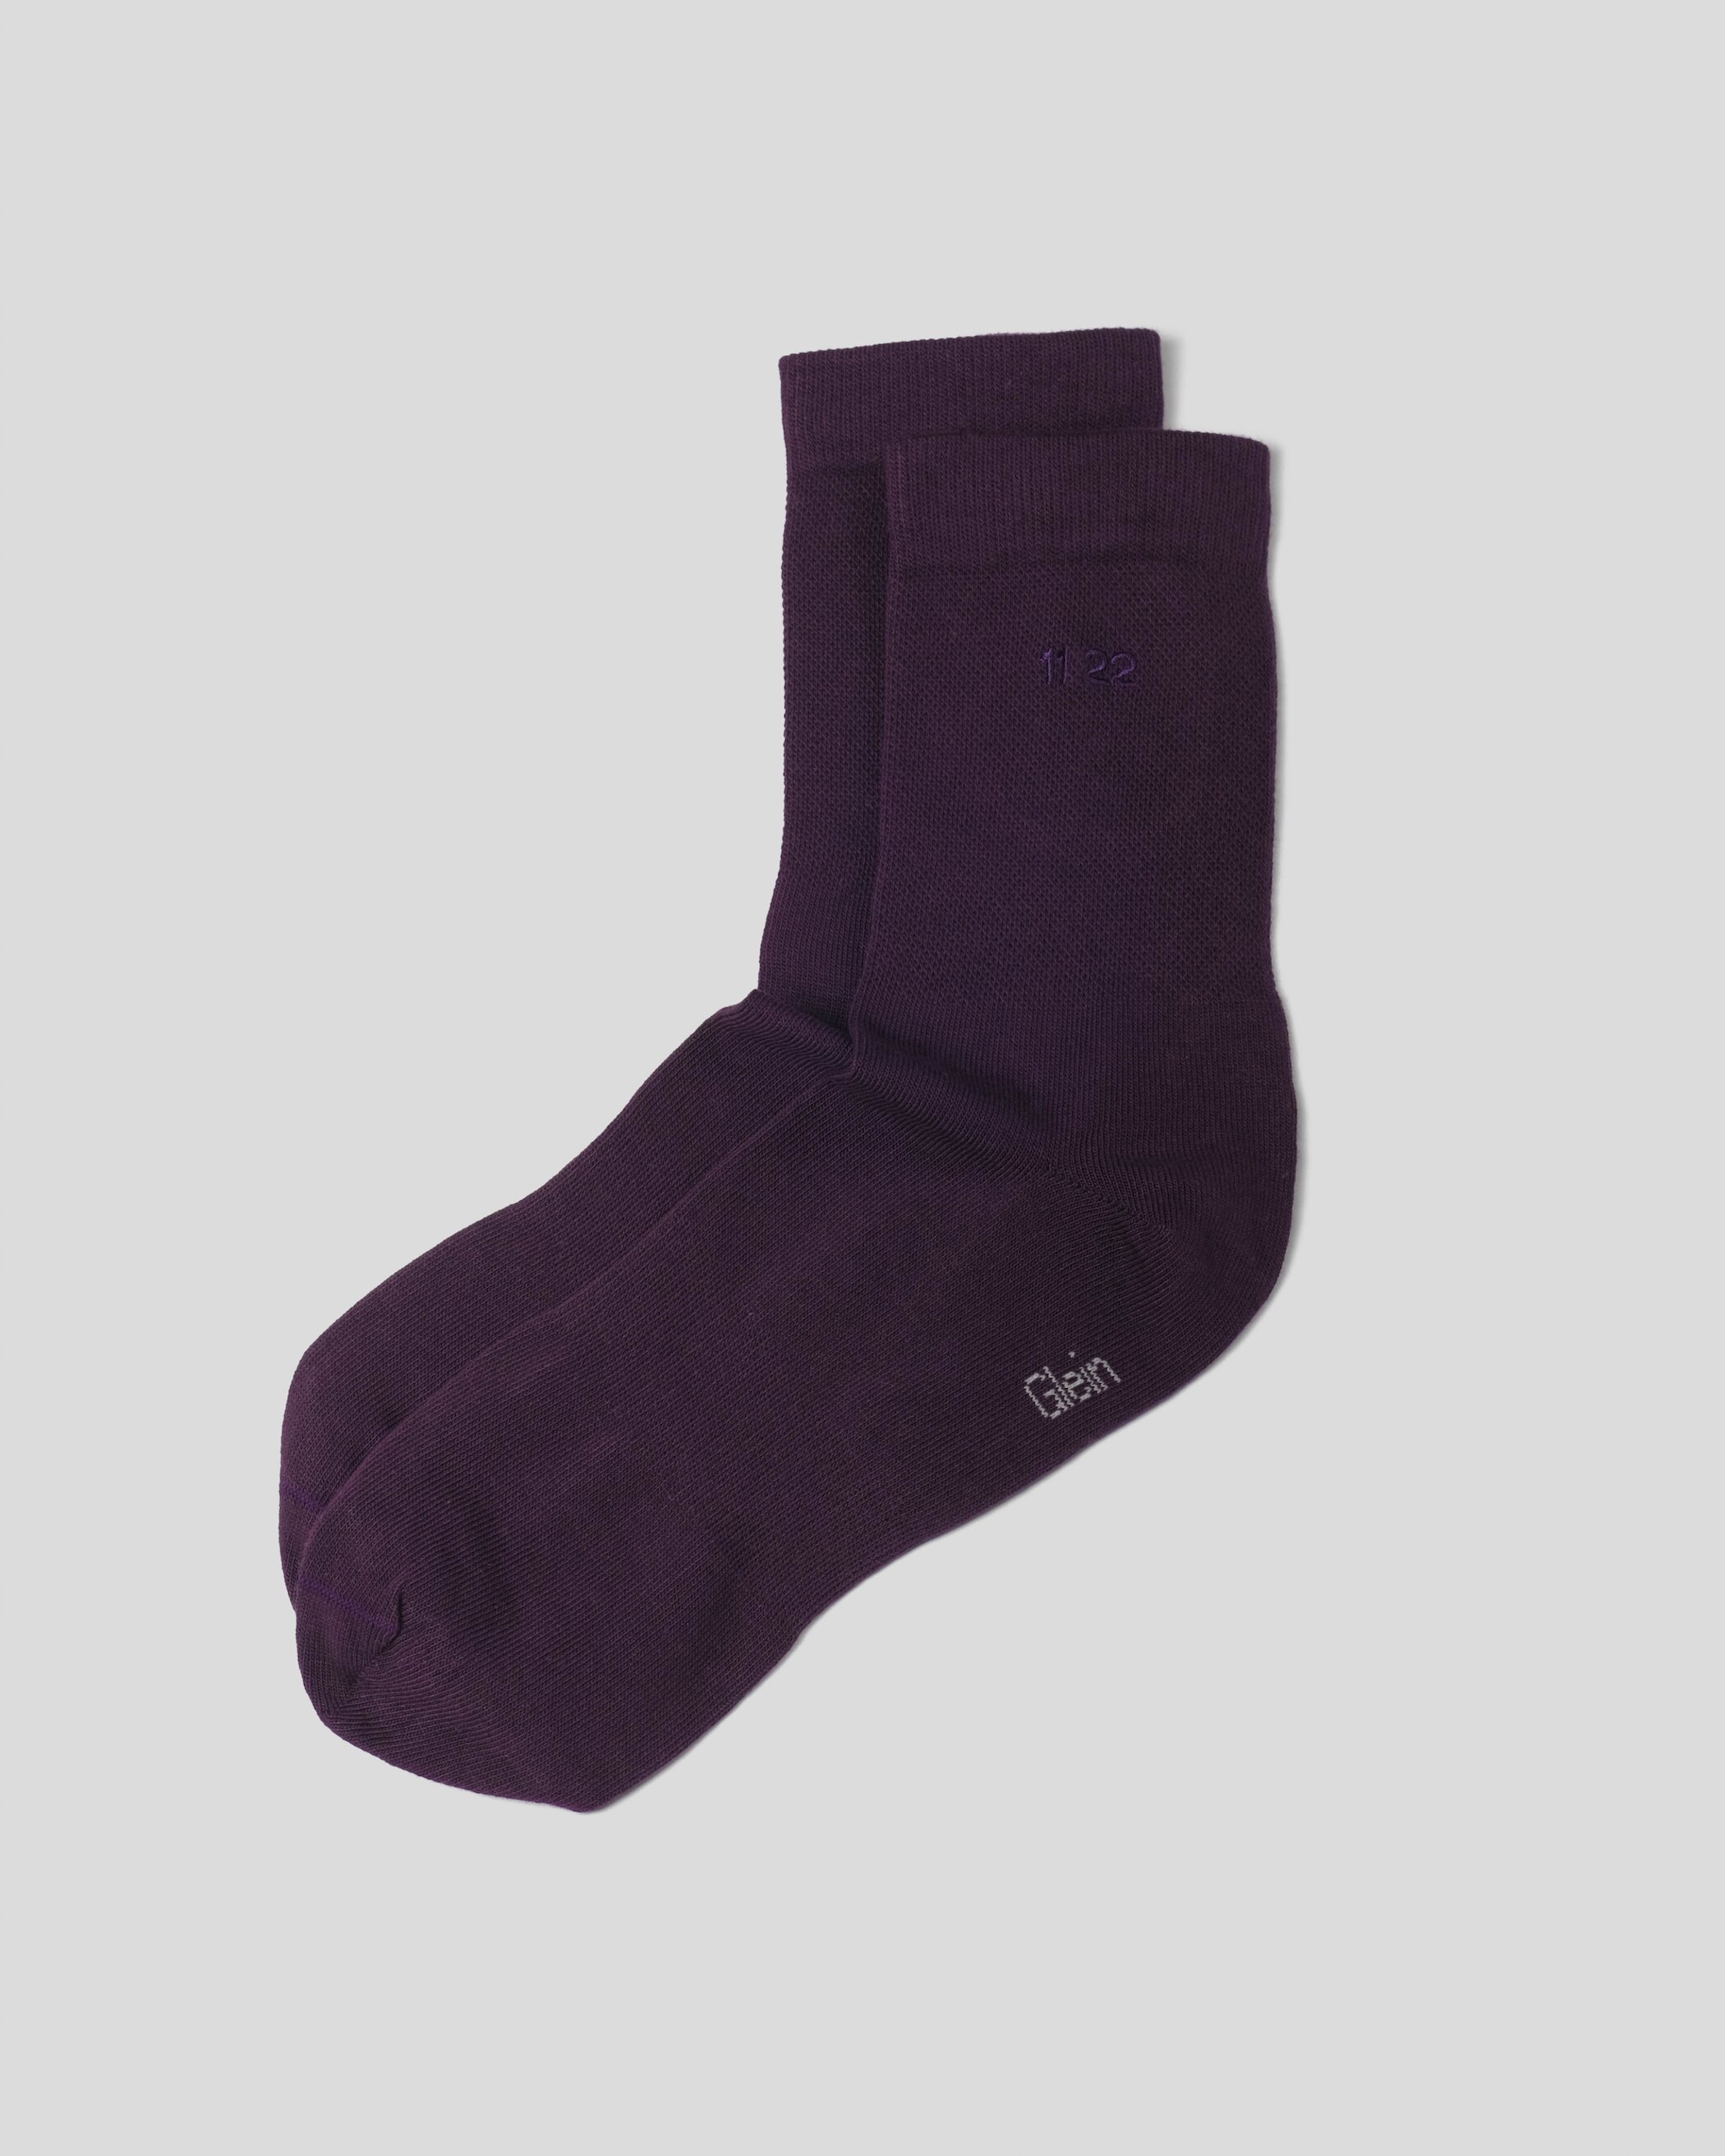 Glein - Socks